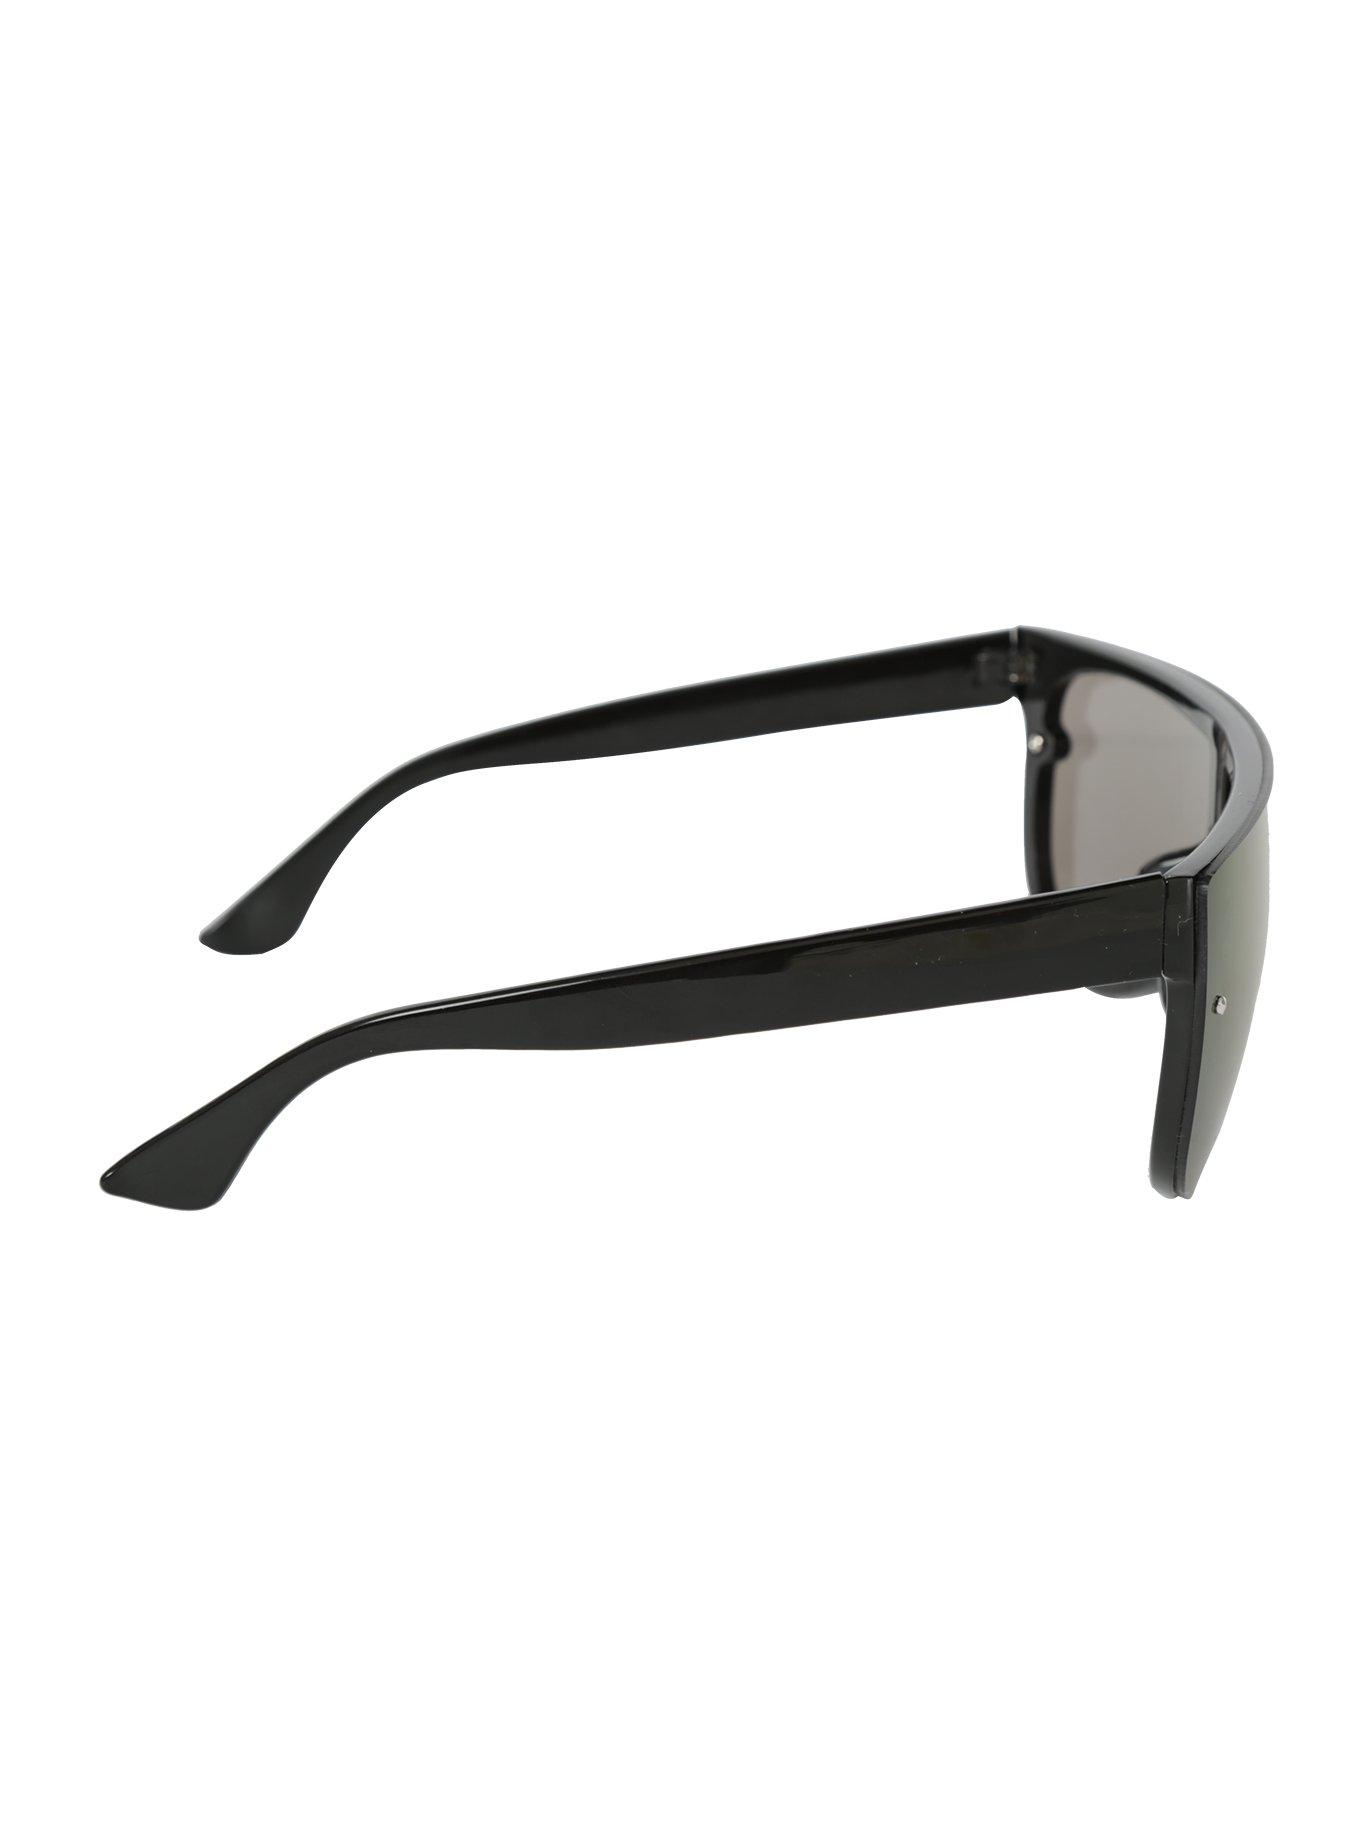 Blue Lens Shield Flat Top Sunglasses, , alternate